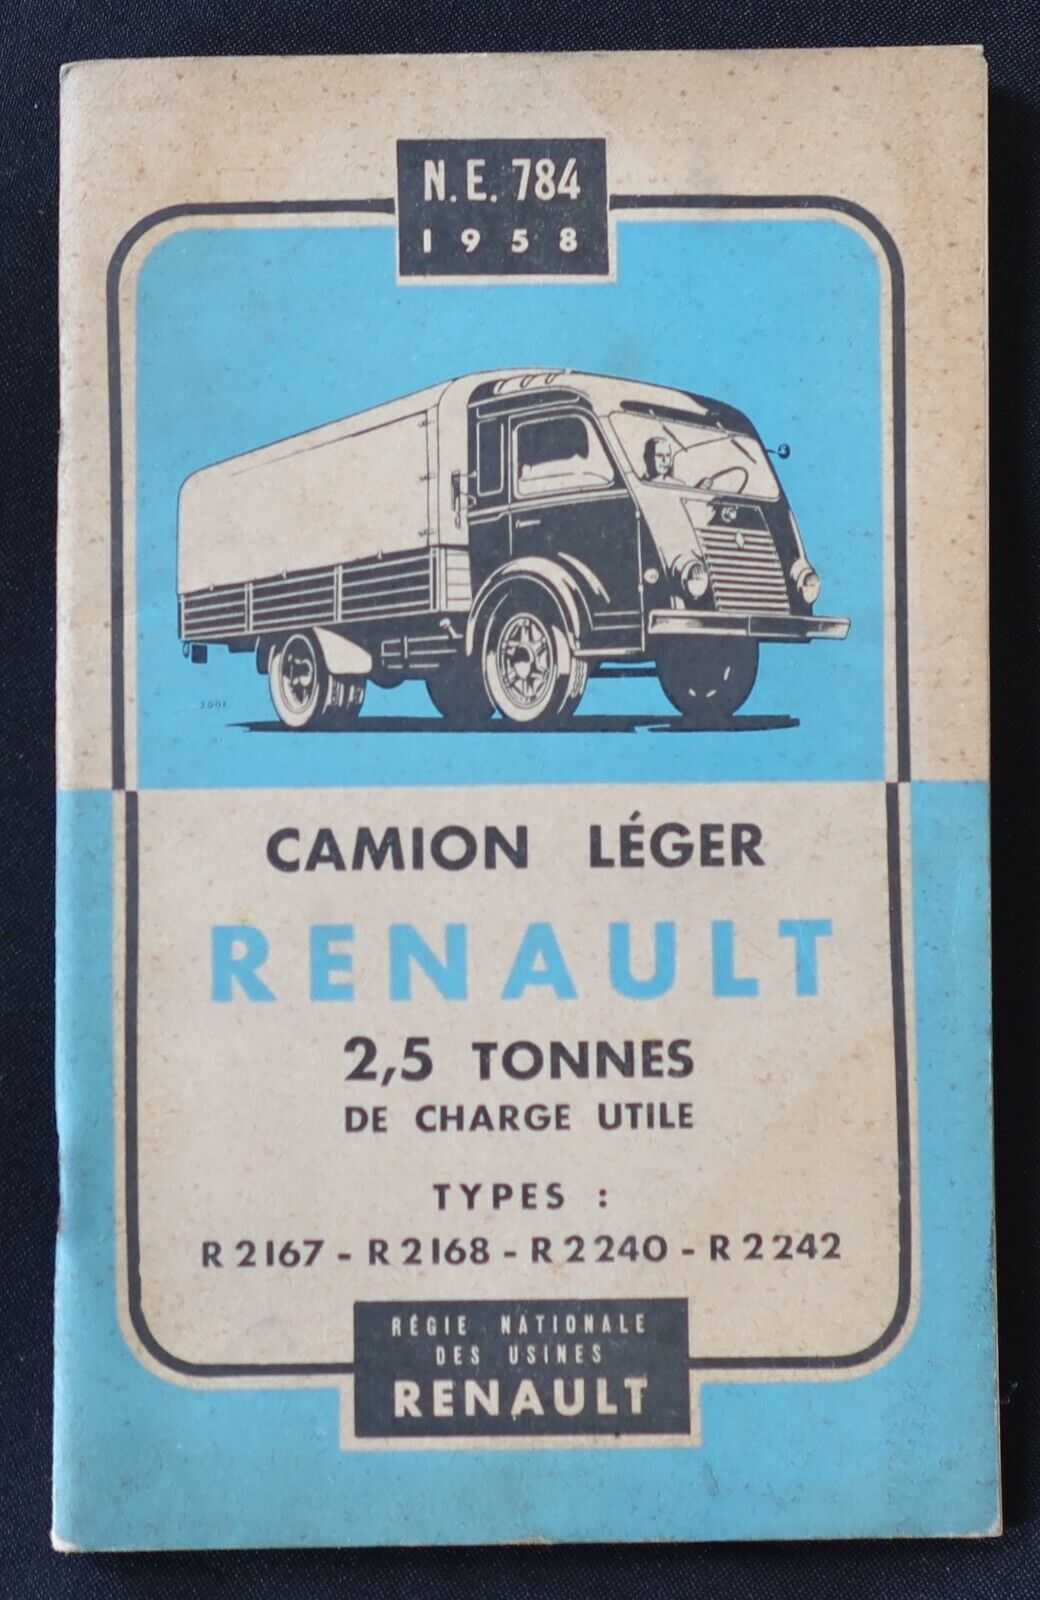 1958 Renault R2167 R2168 R2240 Automobile Catalogue